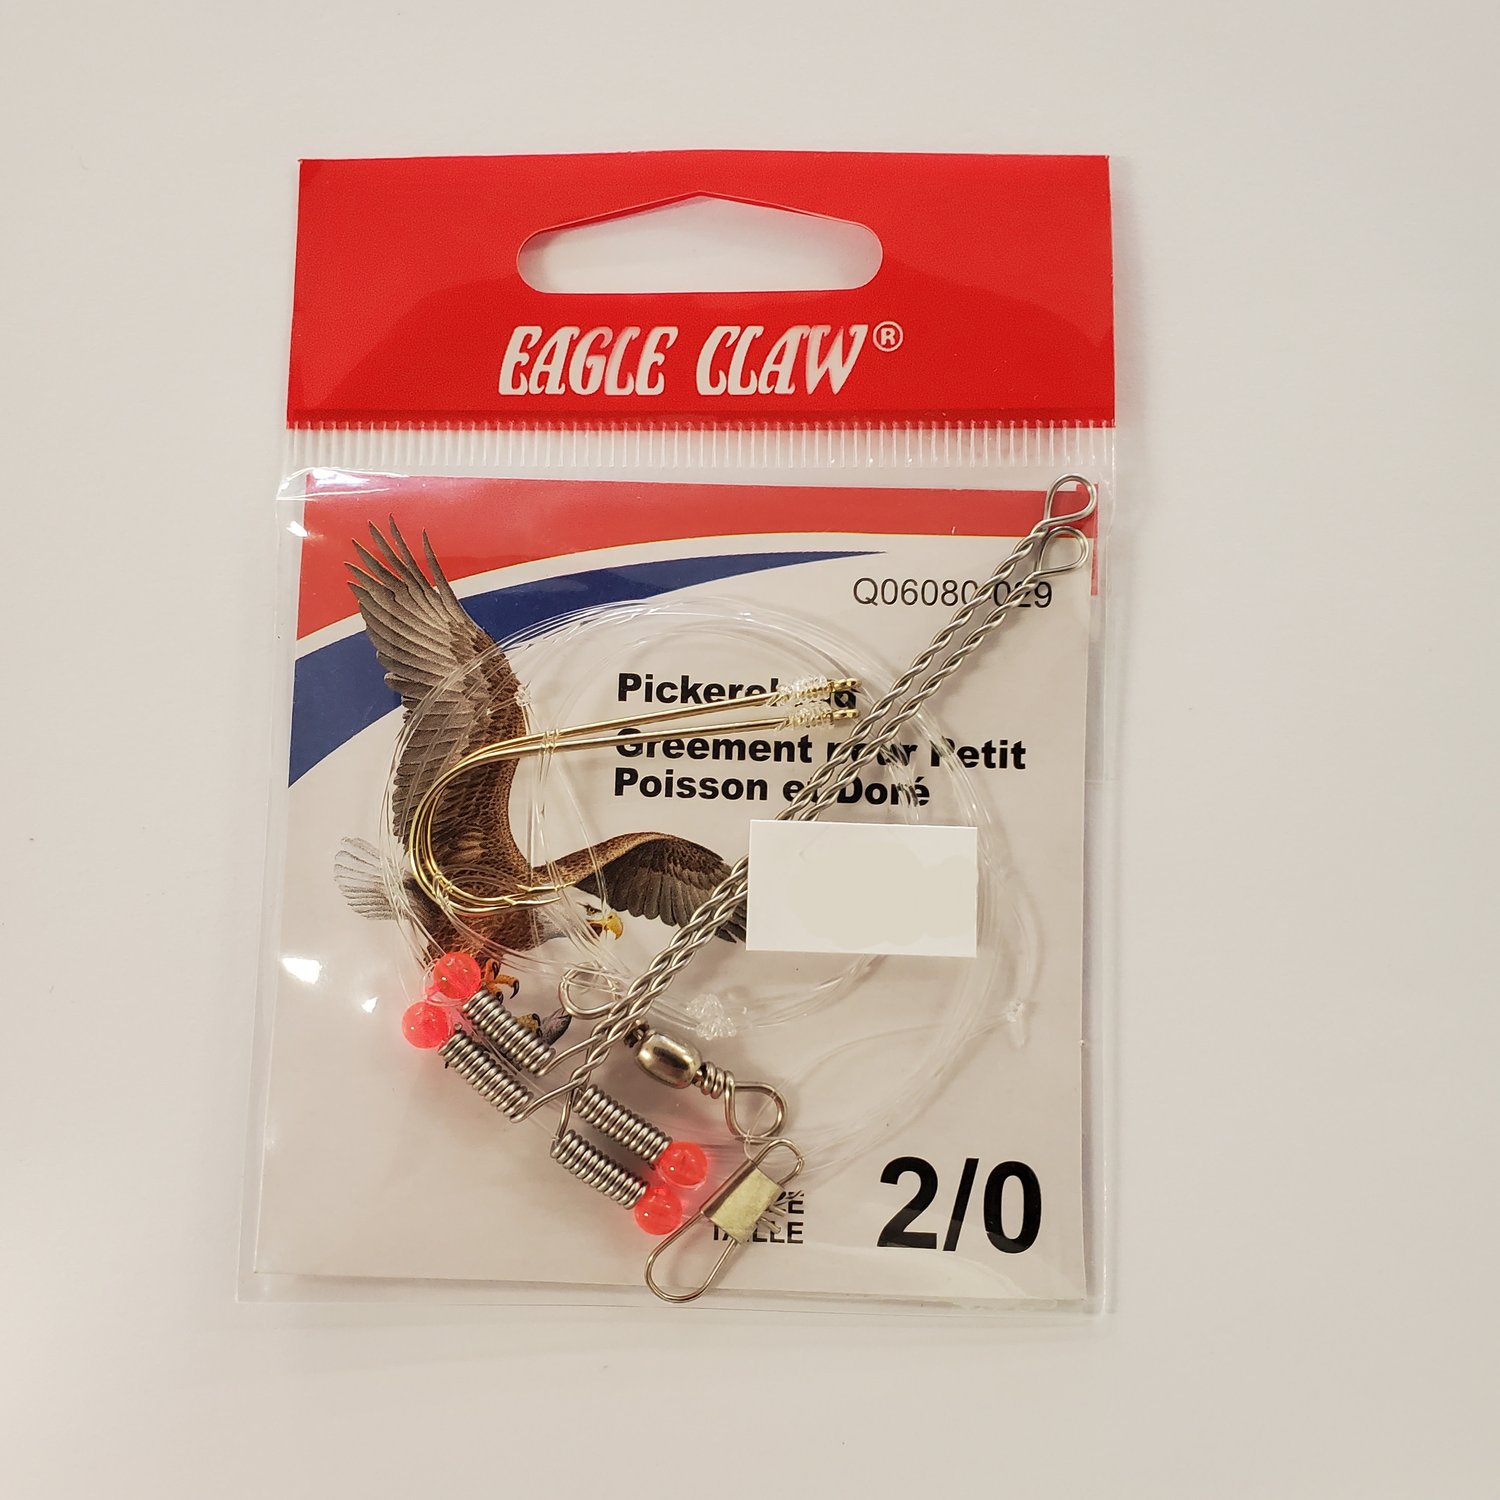 Eagle Claw Pickerel rig 2/0 — Fehr's Sporting Goods